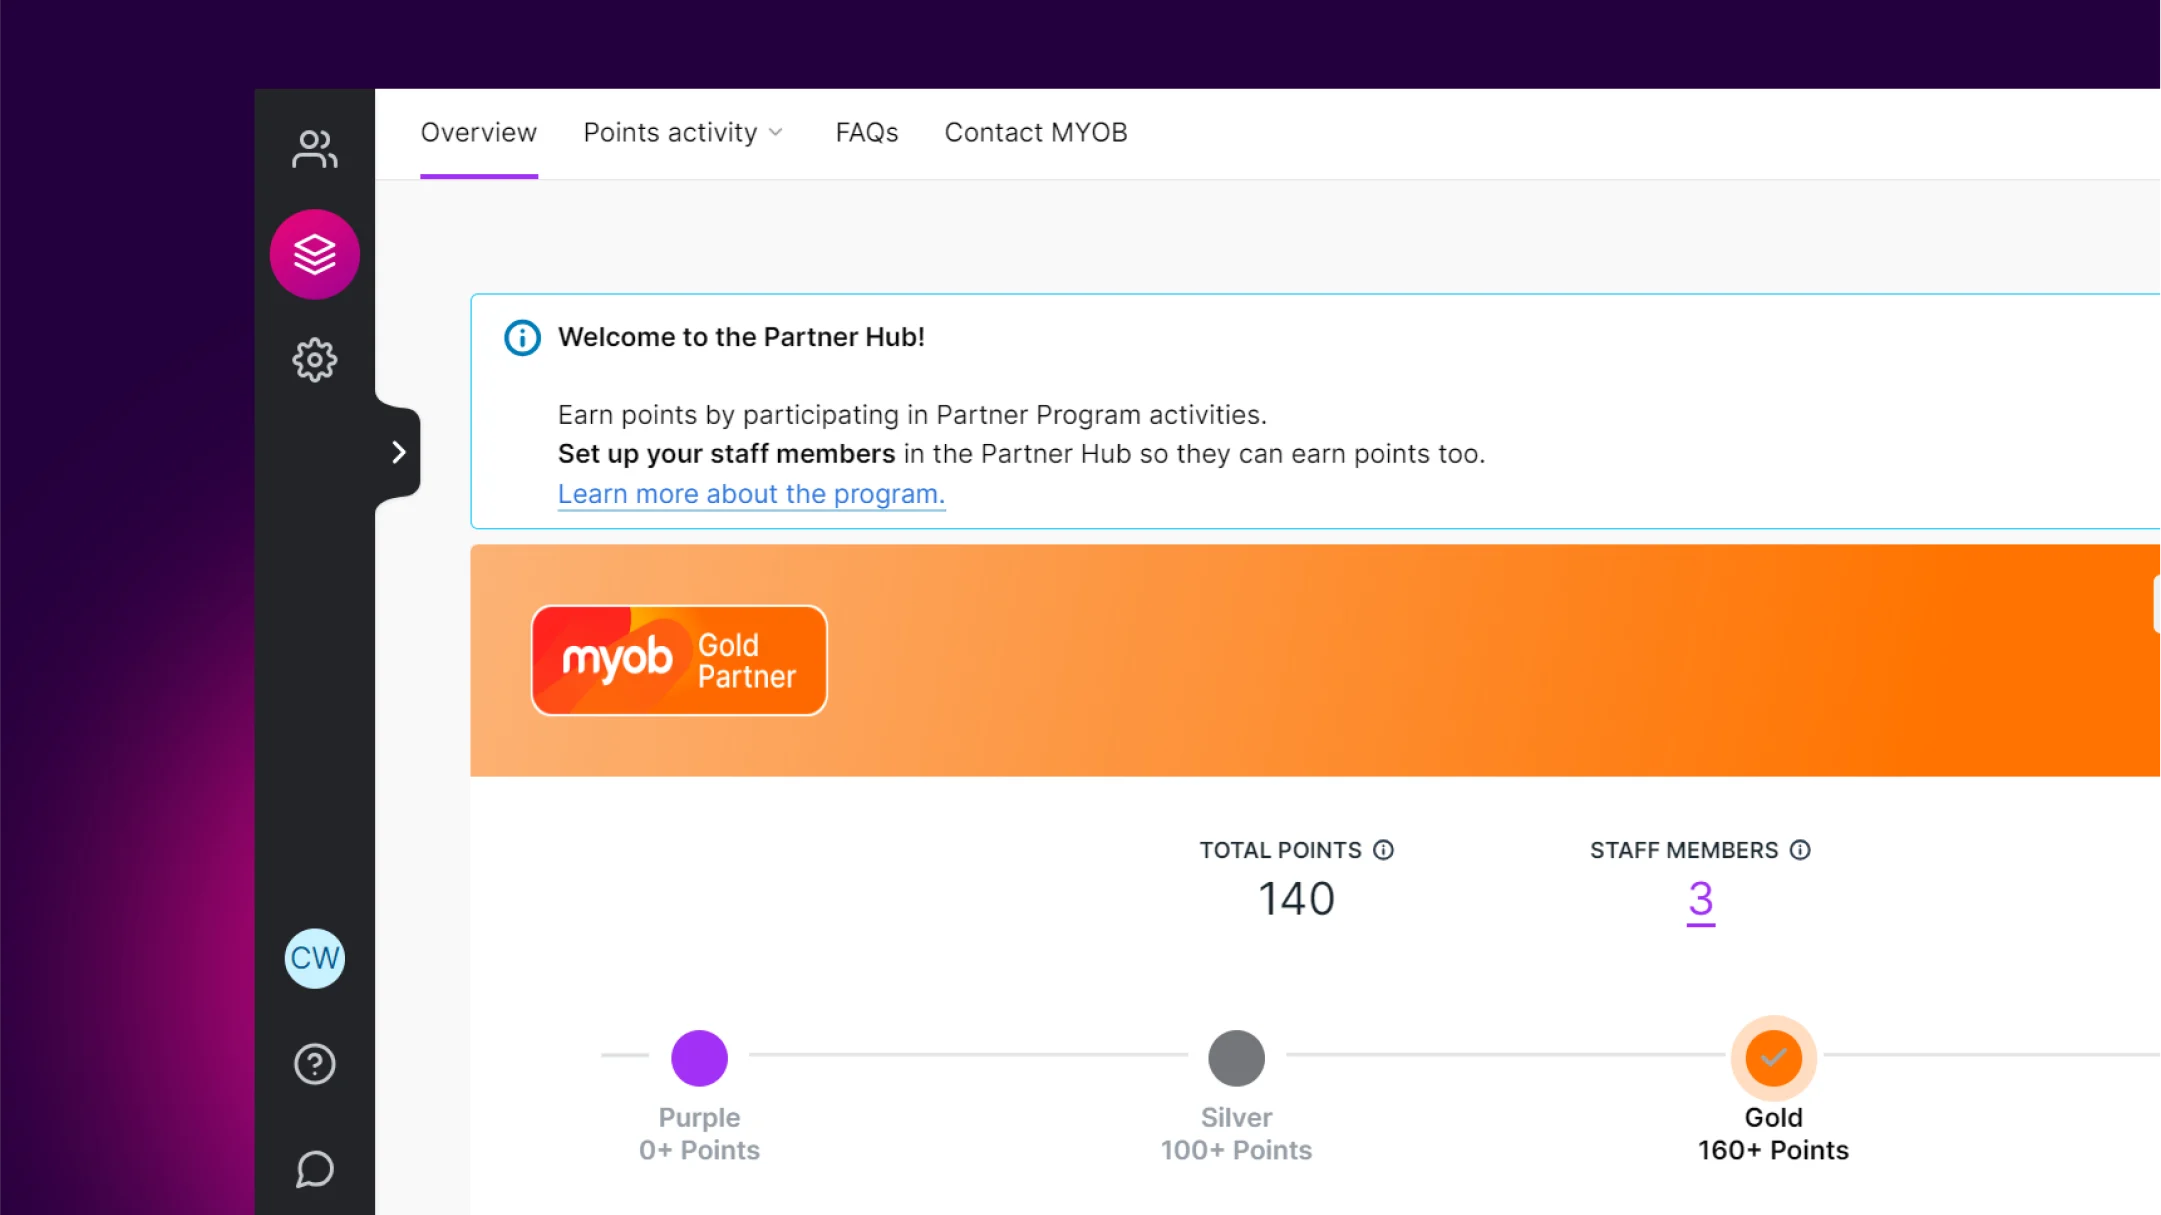 MYOB Partner program dashboard showing a gold partner with 140 points. 